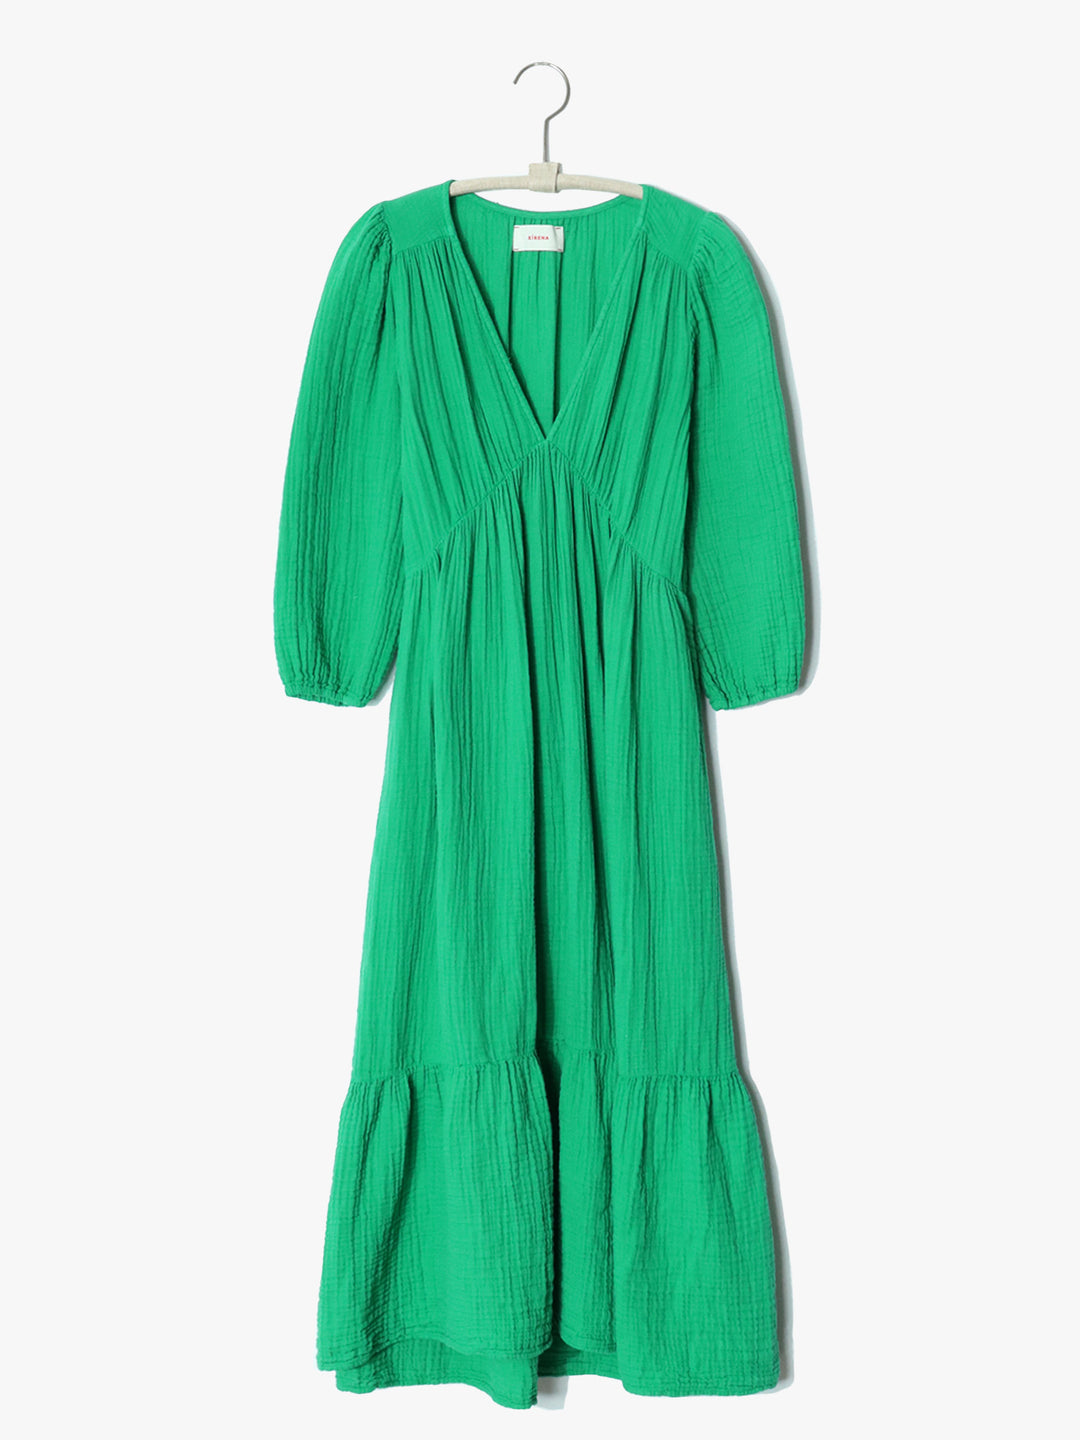 Xirena - Ella Dress in Apple Green